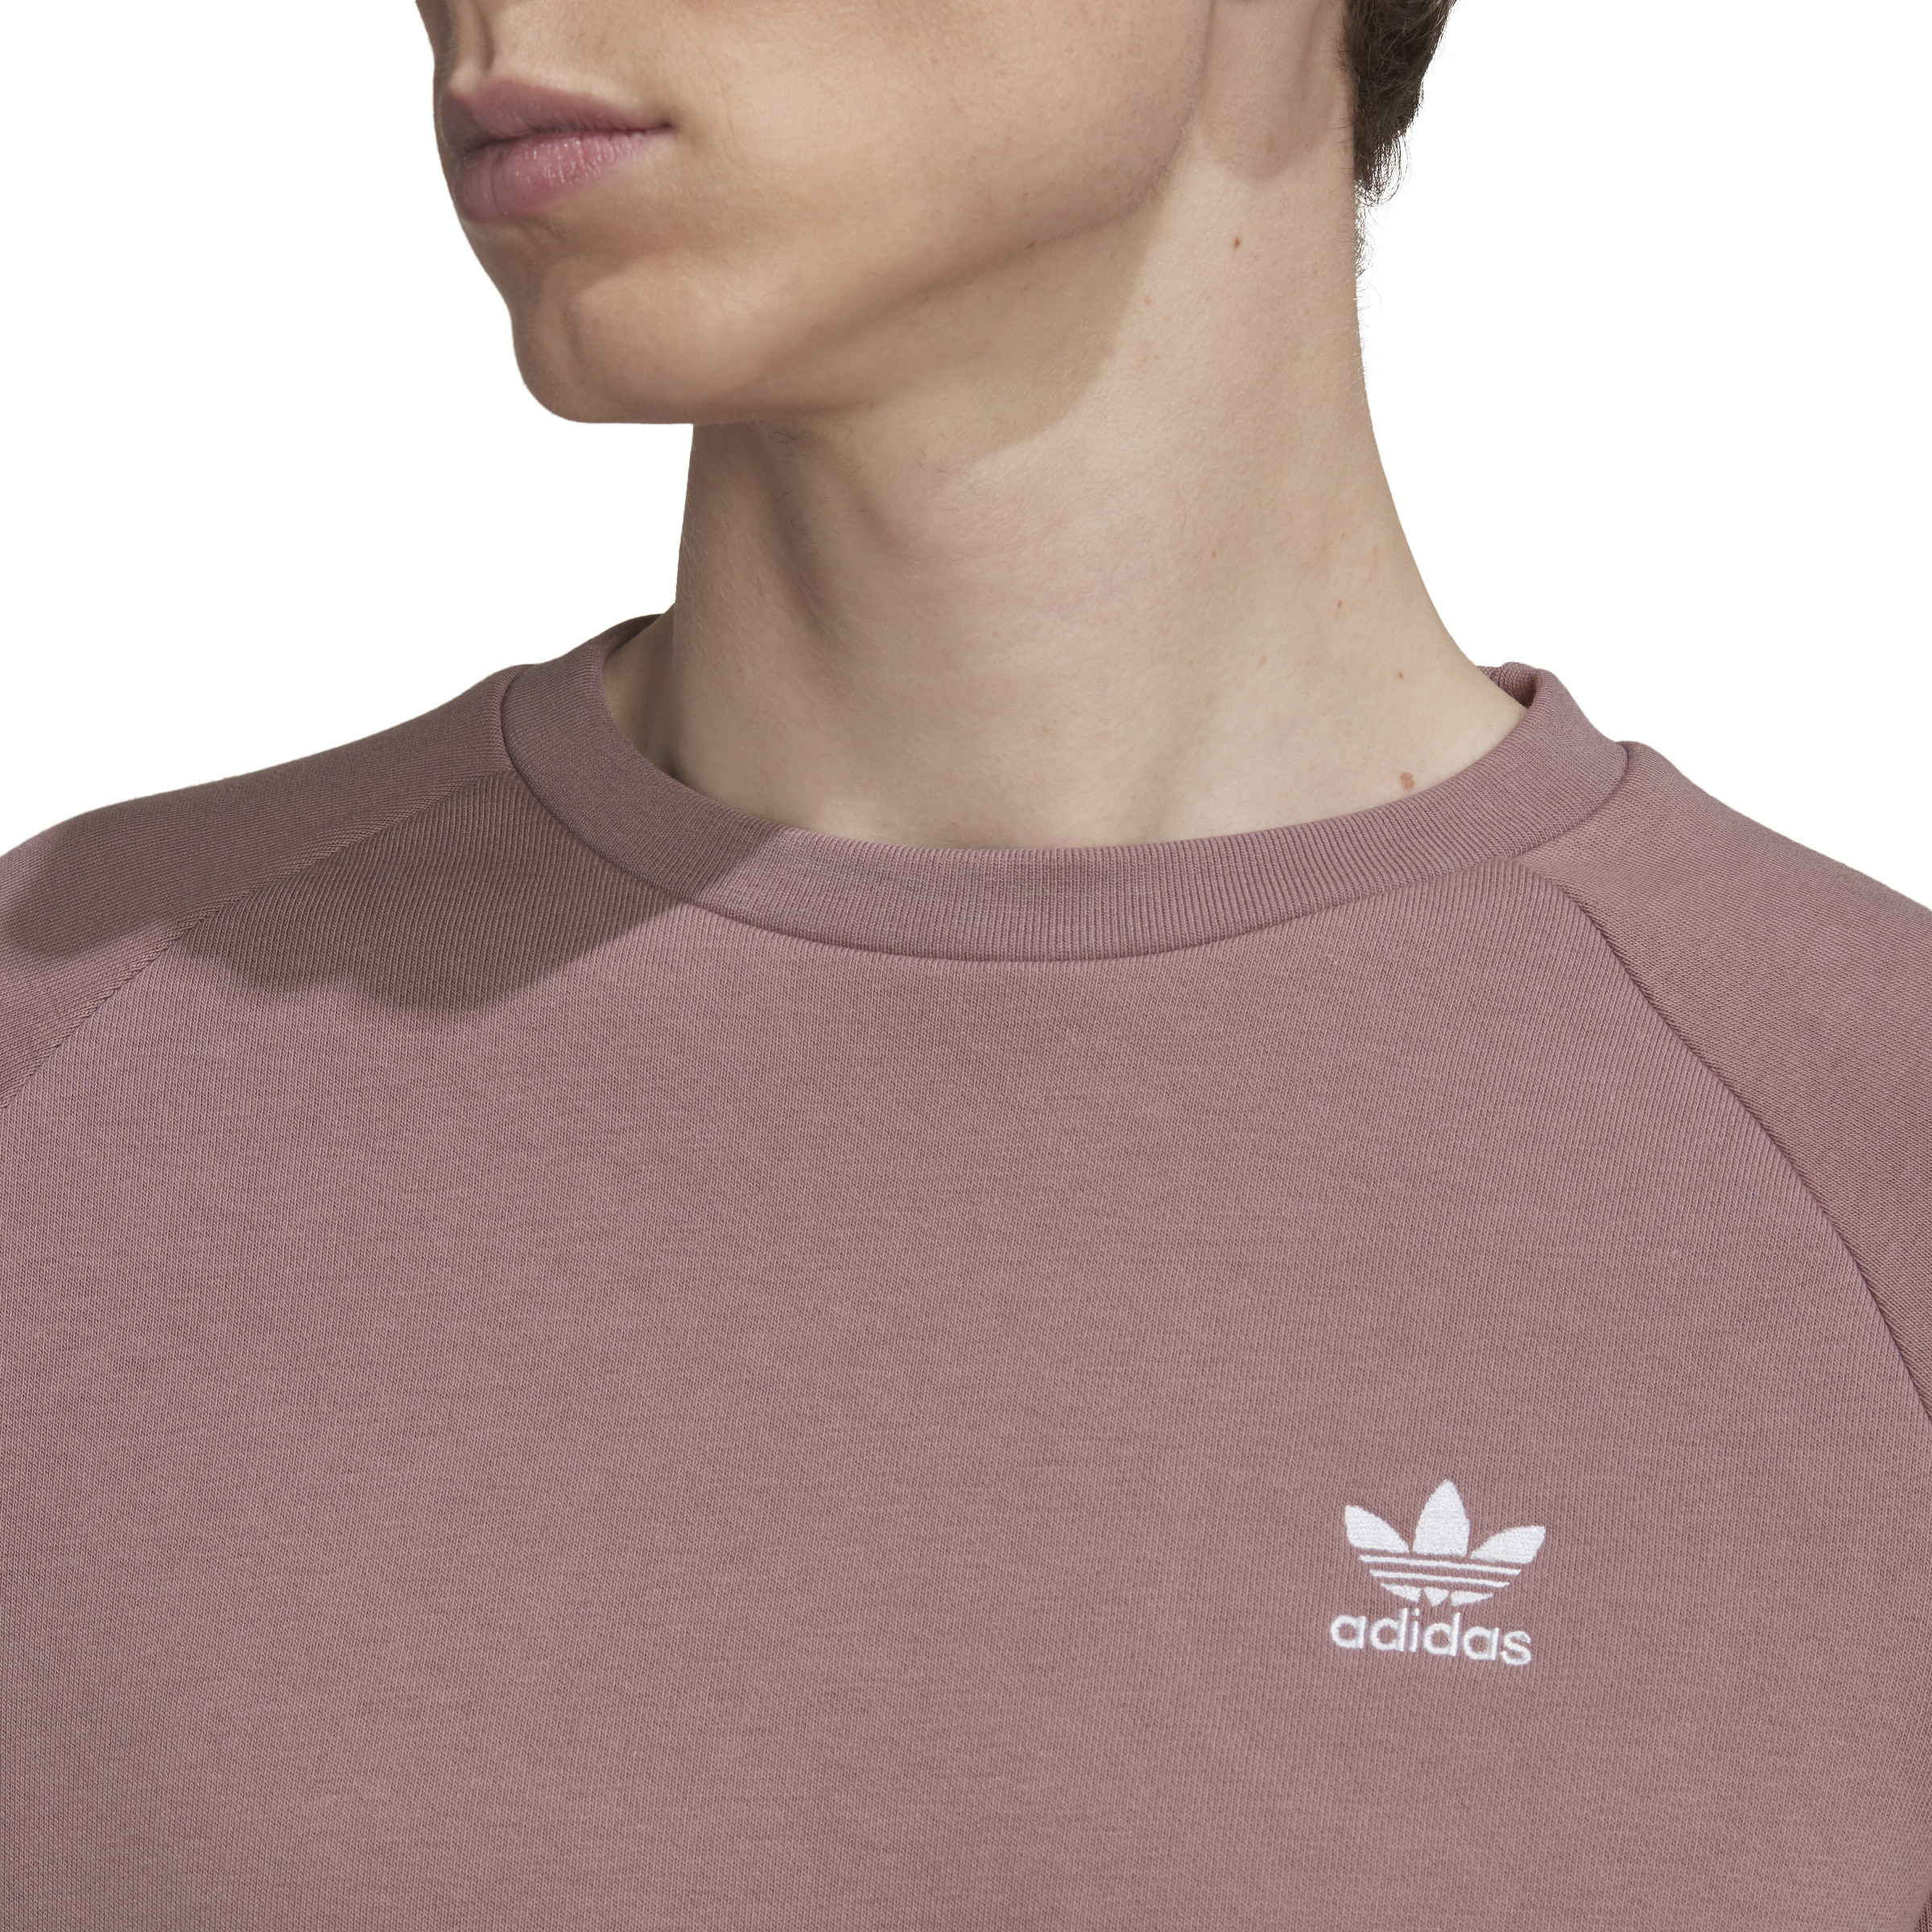 Adidas - Adicolor essentials trefoil crewneck sweatshirt, Antique Pink, large image number 4